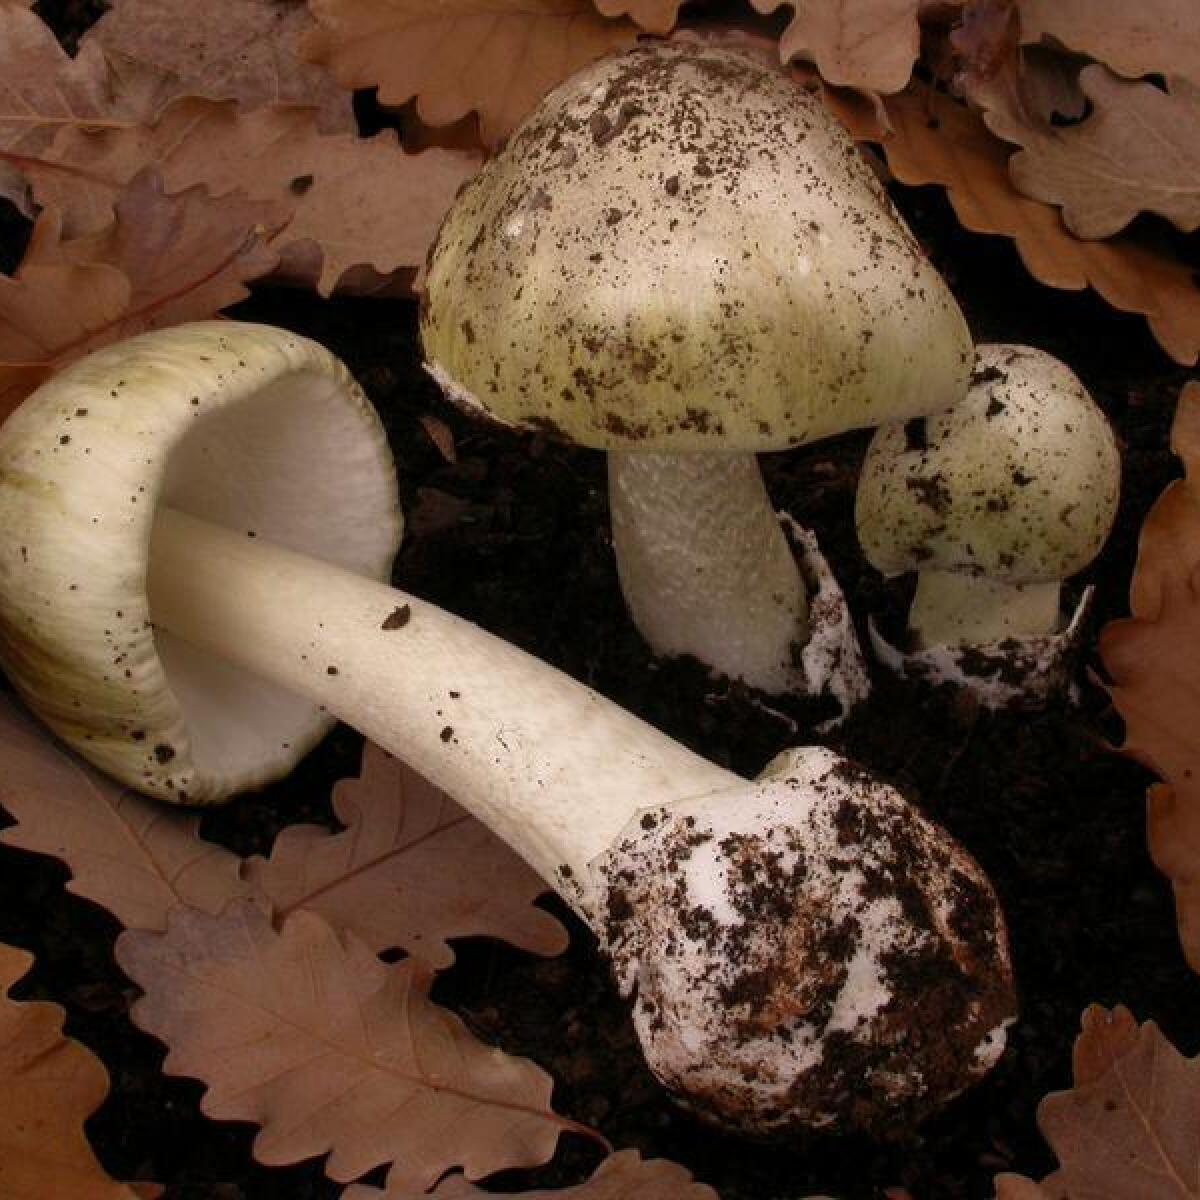 Death Cap mushrooms.